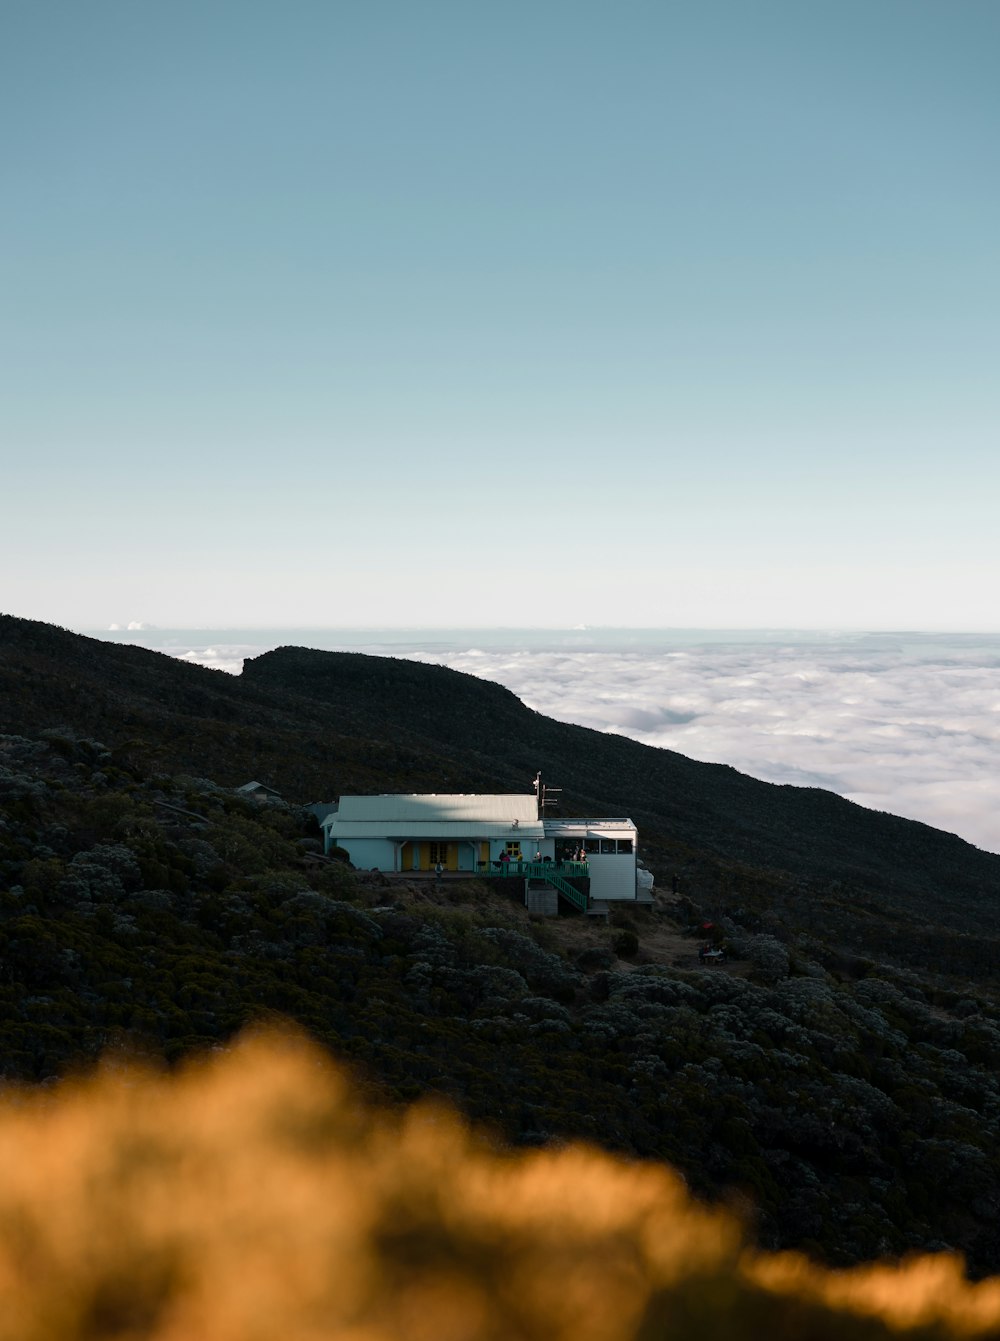 Una casa su una collina sopra le nuvole